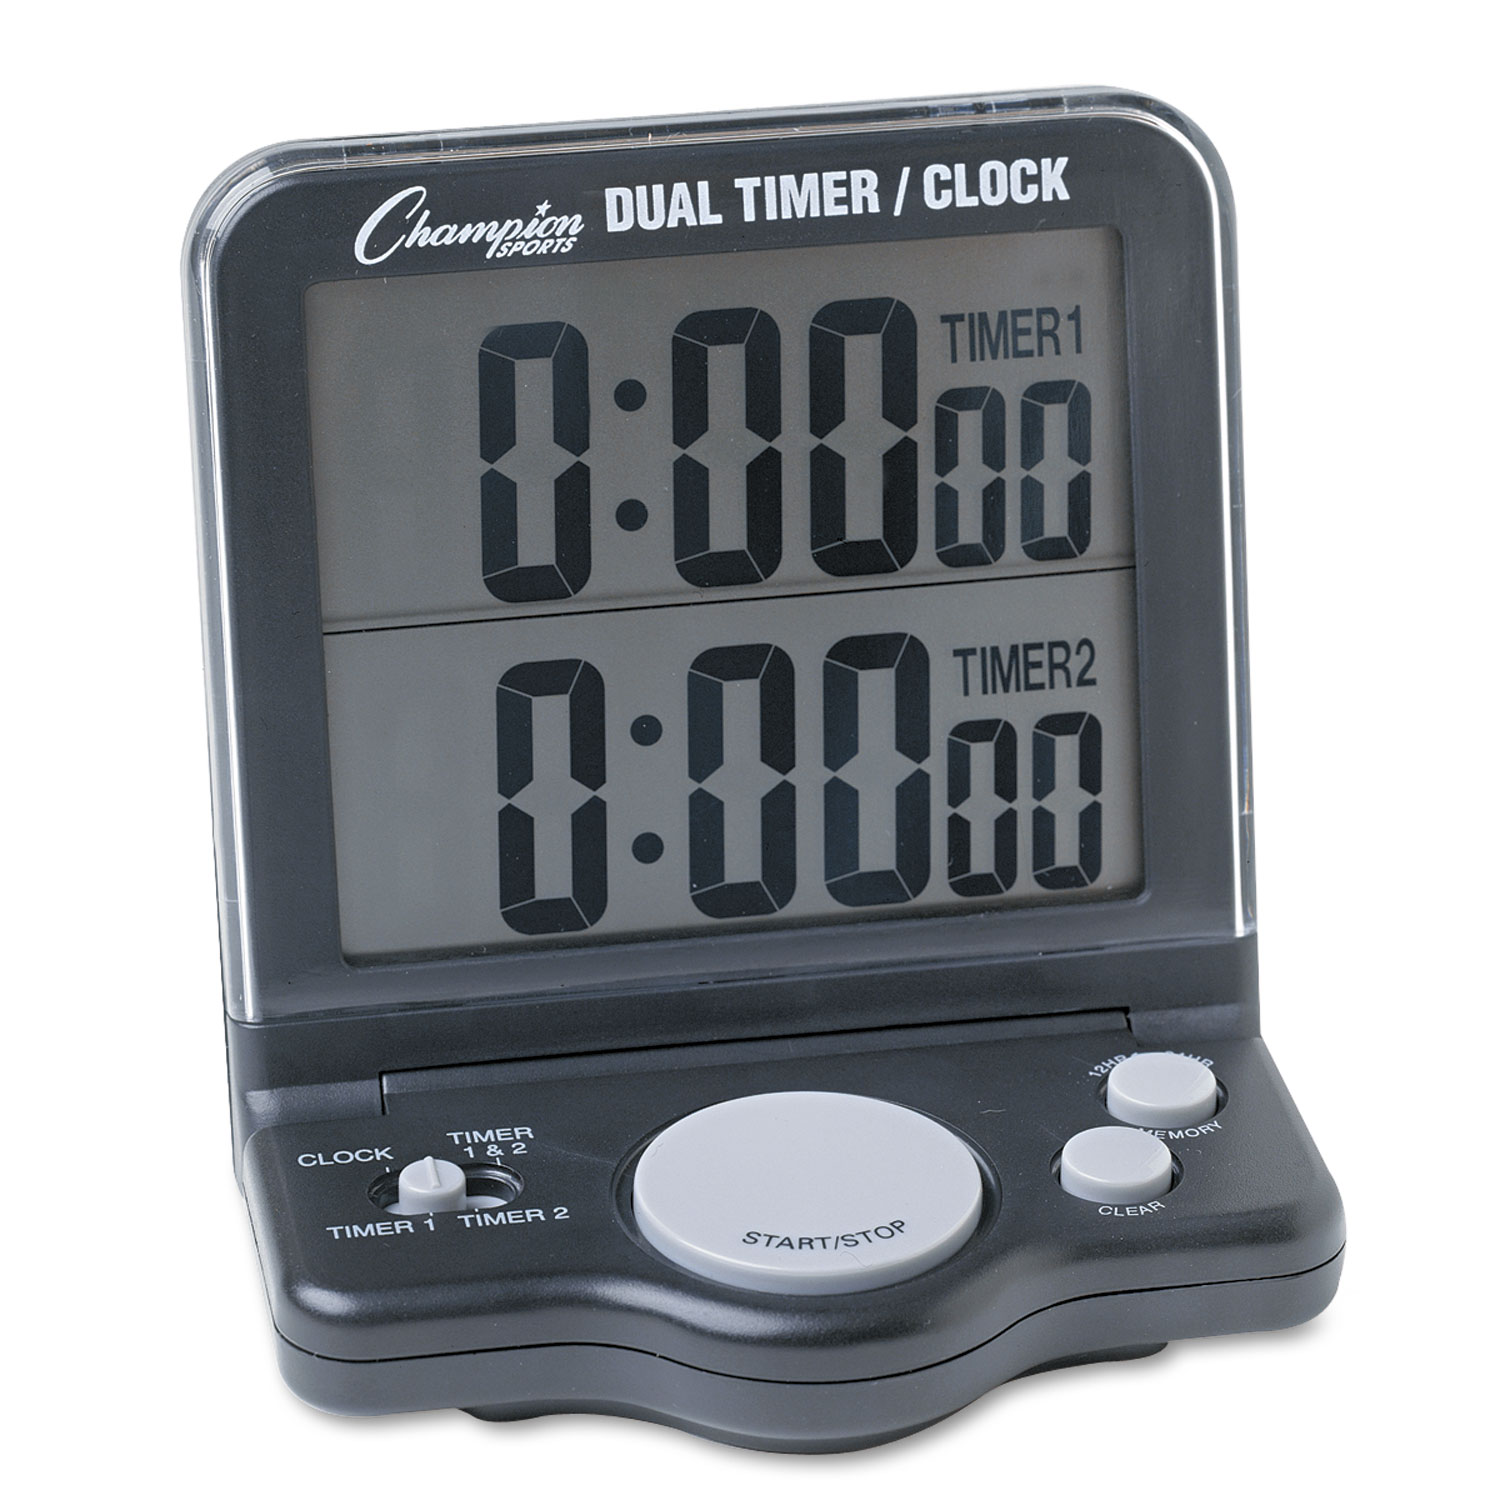  Champion Sports DC100 Dual Timer/Clock w/Jumbo Display, LCD, 3 1/2 x 1 x 4 1/2 (CSIDC100) 